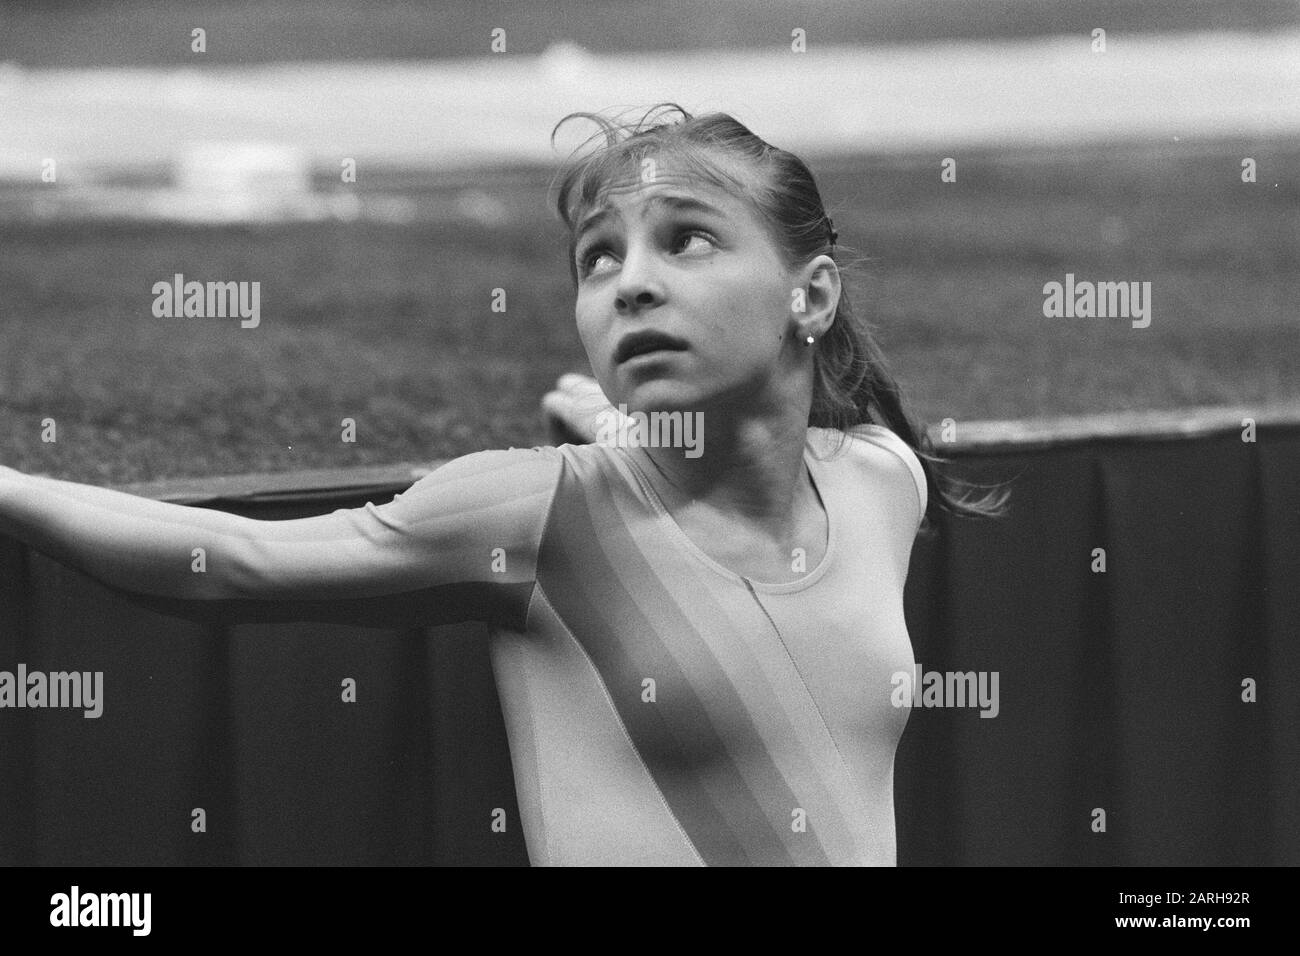 World Gymnastics in Rotterdam early 19/10; Romanian Daniela Silivas during training Date: October 15, 1987 Location: Rotterdam, Zuid-Holland Keywords: TURNEN Stock Photo